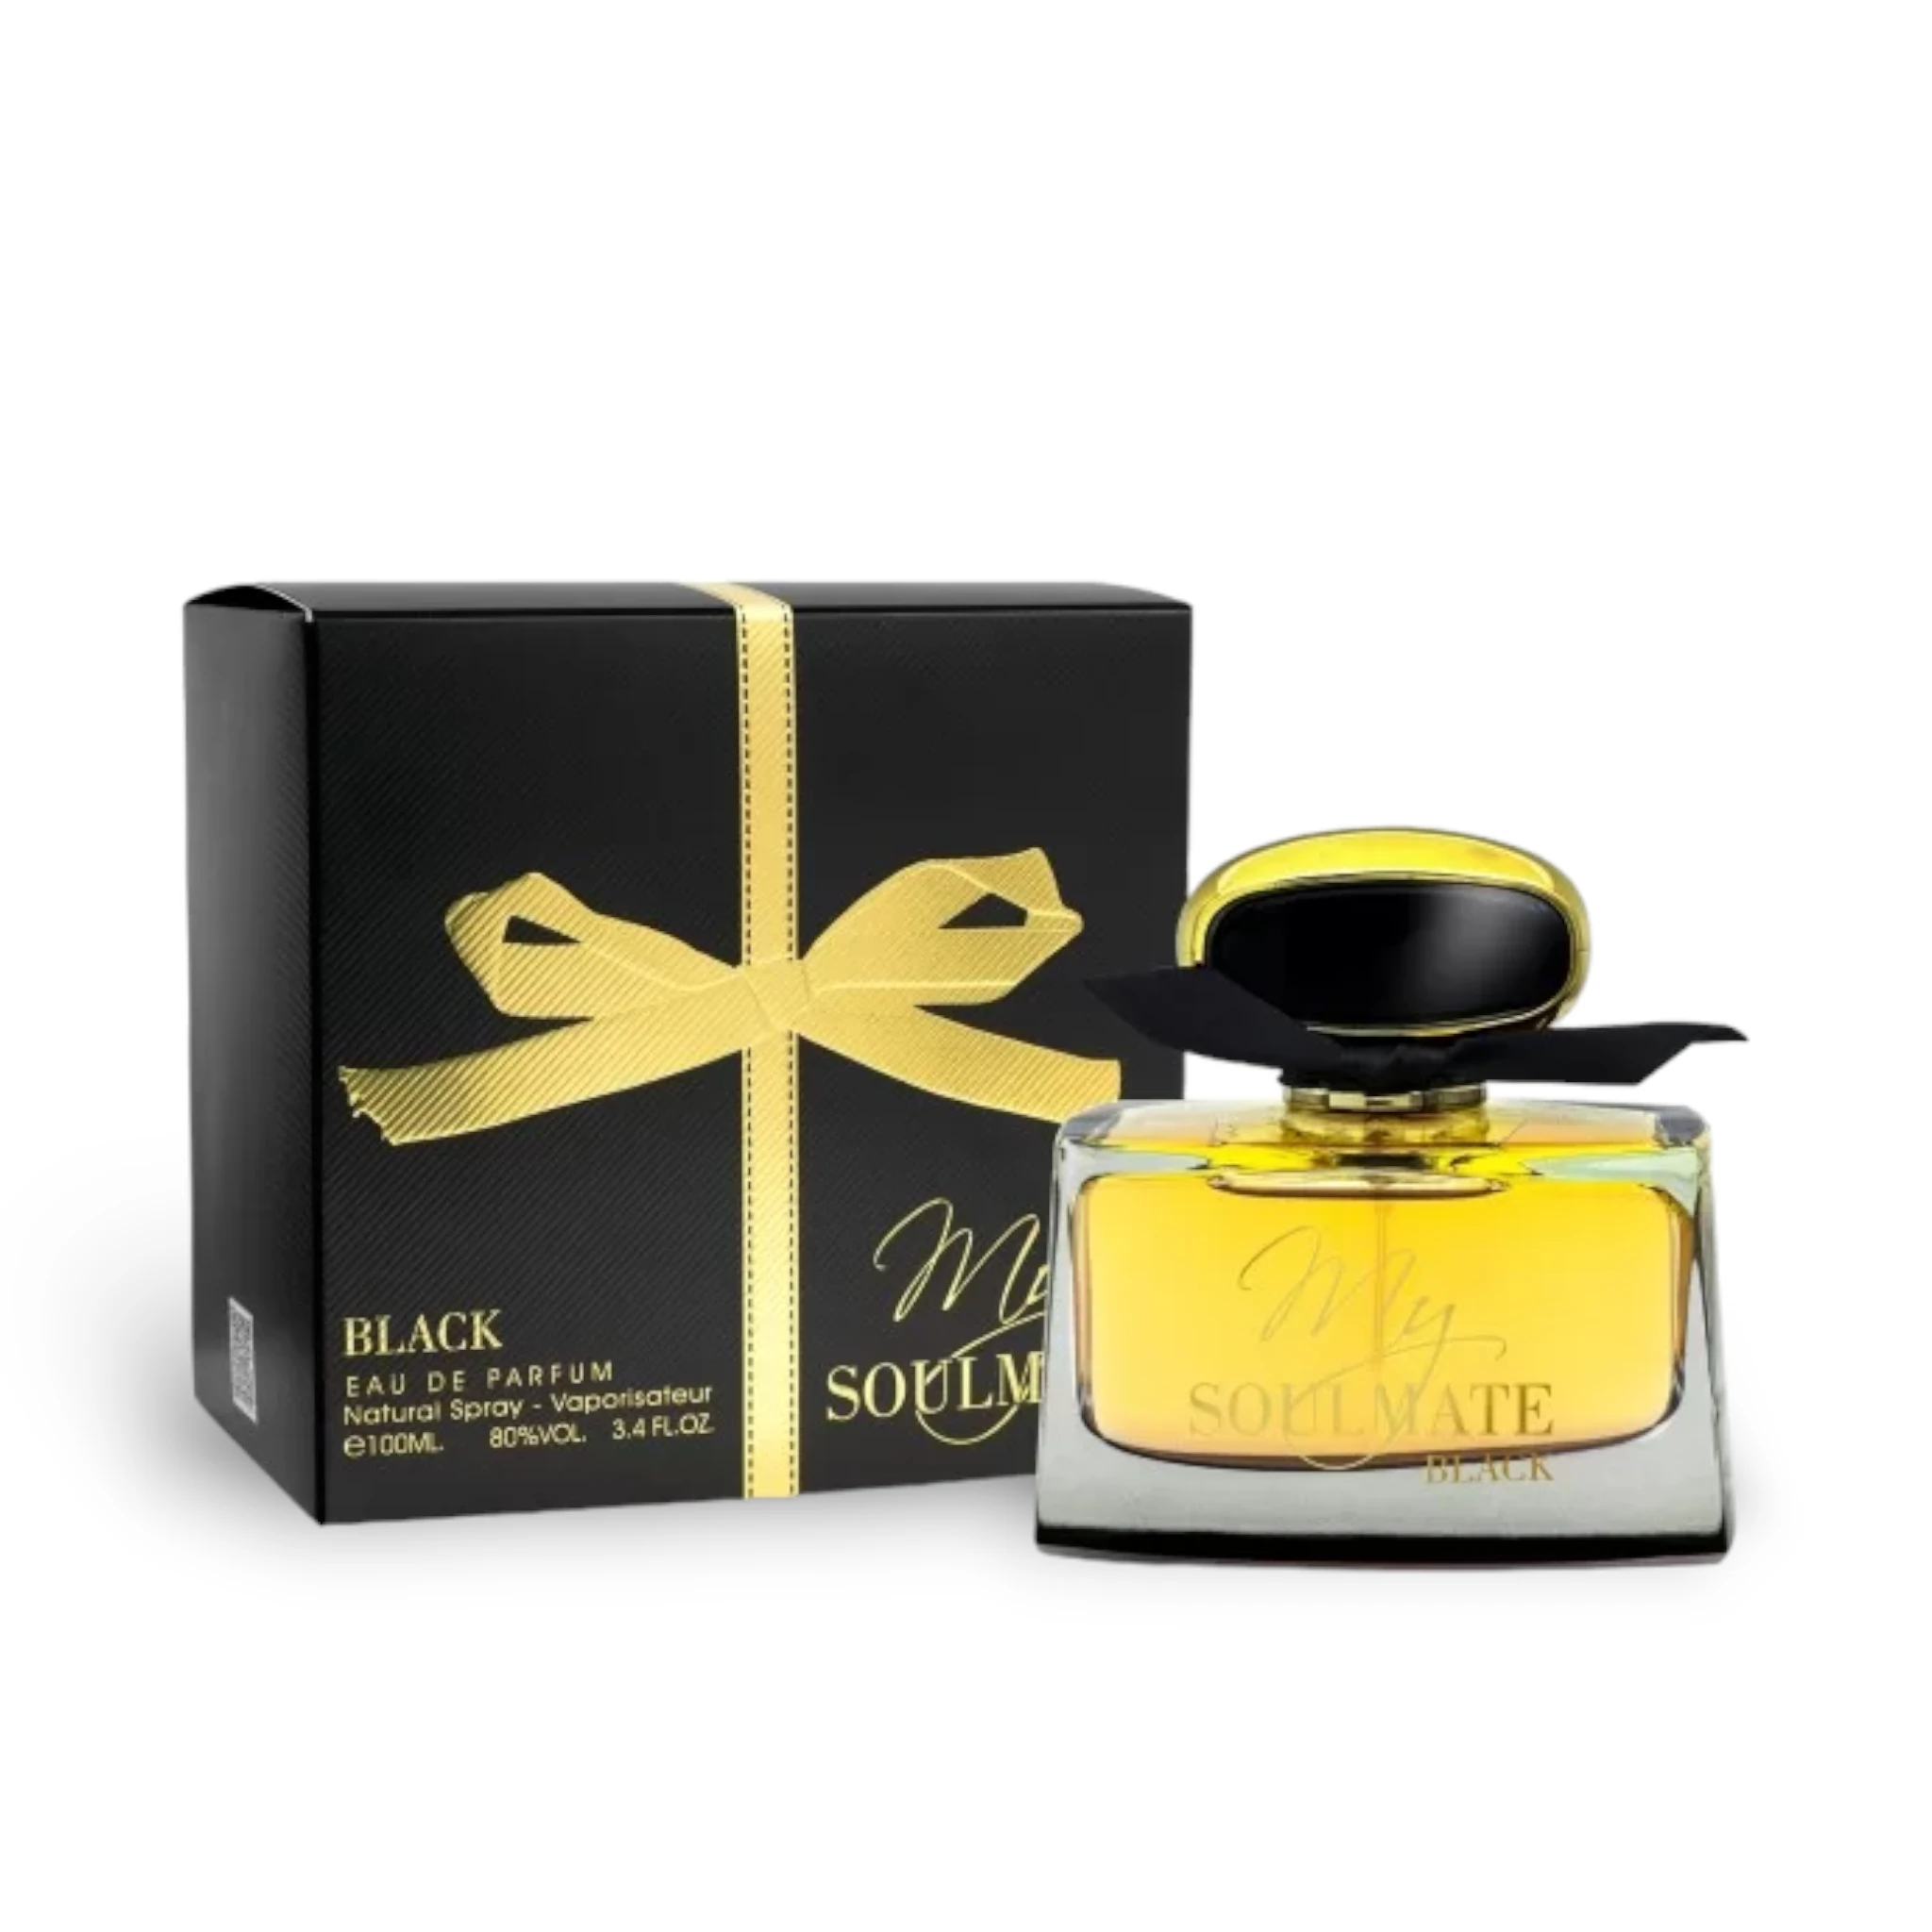 My Soulmate Black Perfume Eau De Parfum 100Ml By Fragrance World